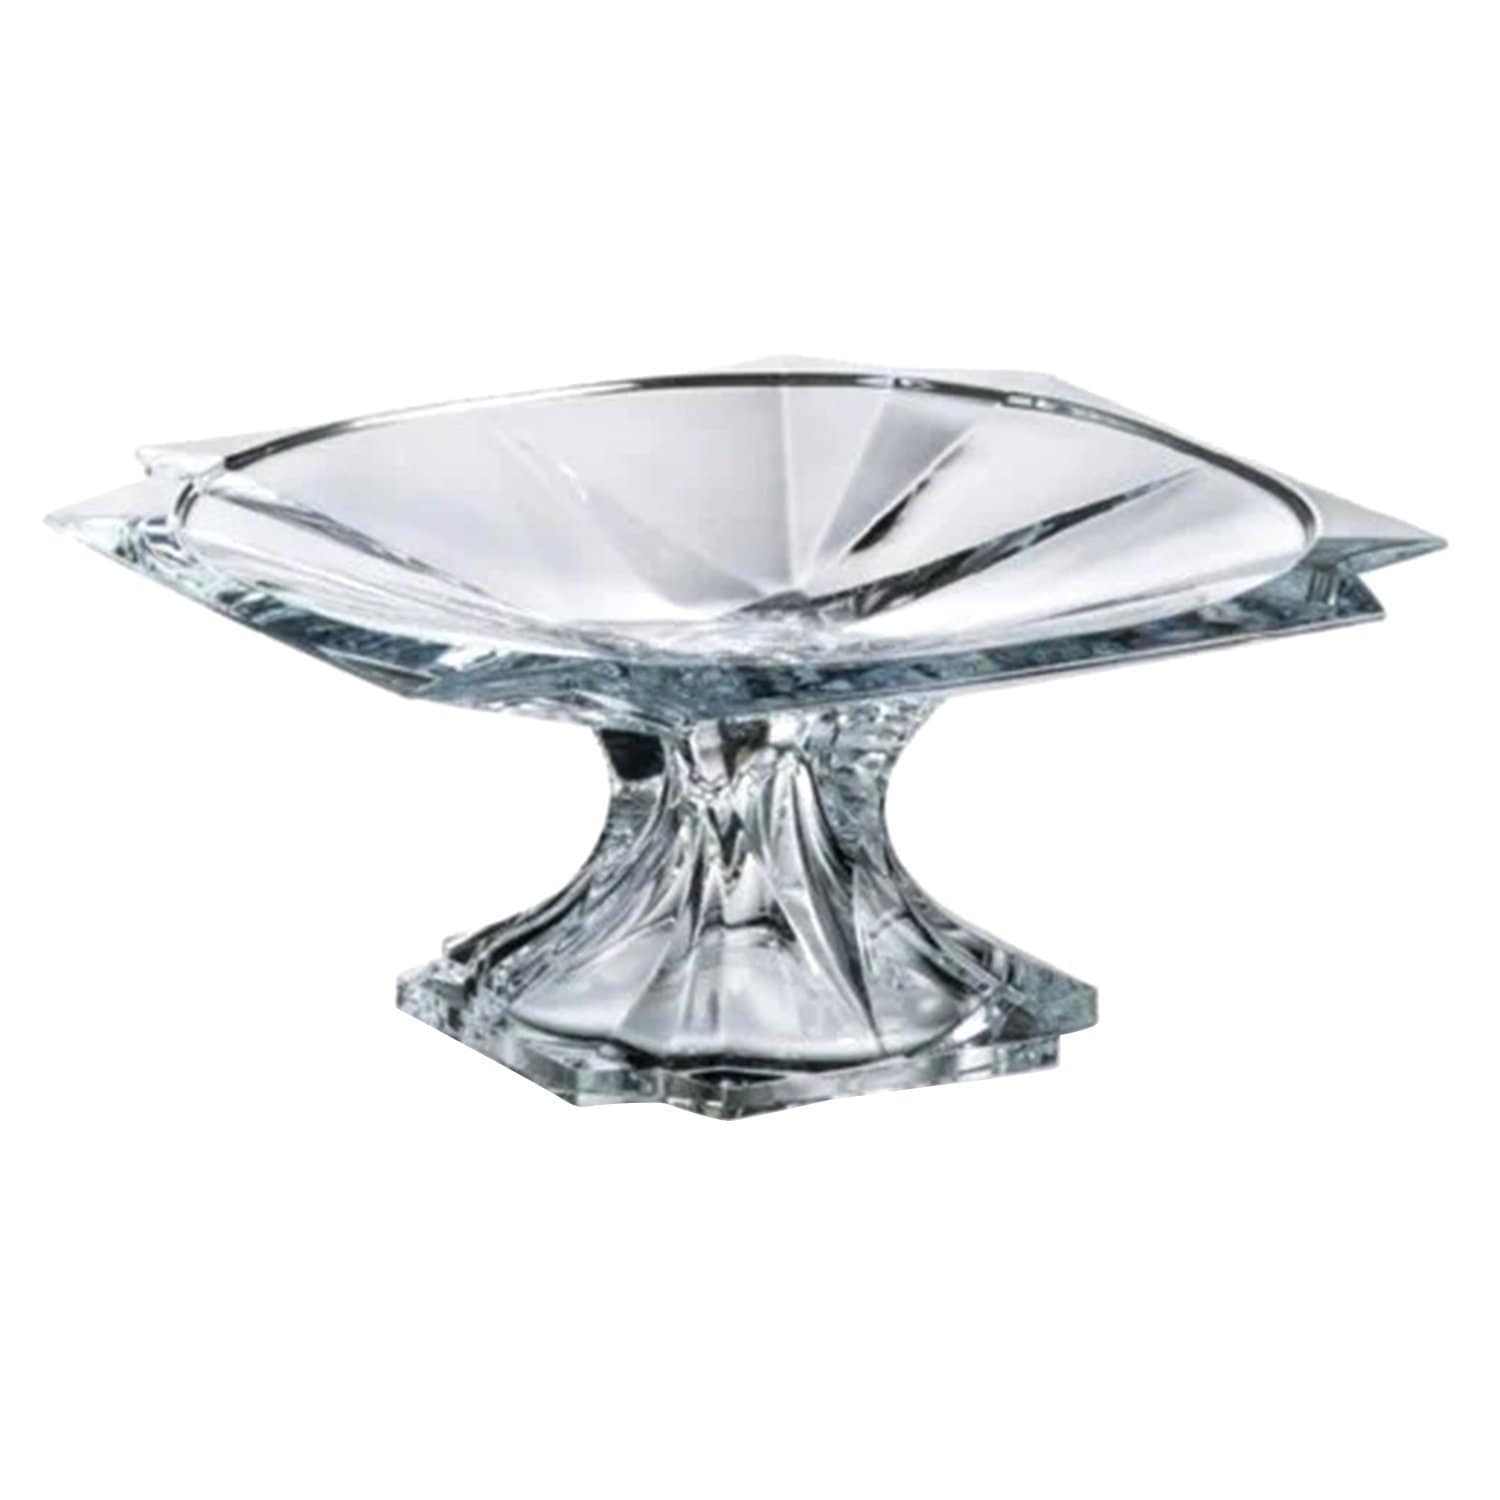 Bohemia Crystal Glass Metropolitan Footed Plate - 33 cm - 5392016 - Jashanmal Home